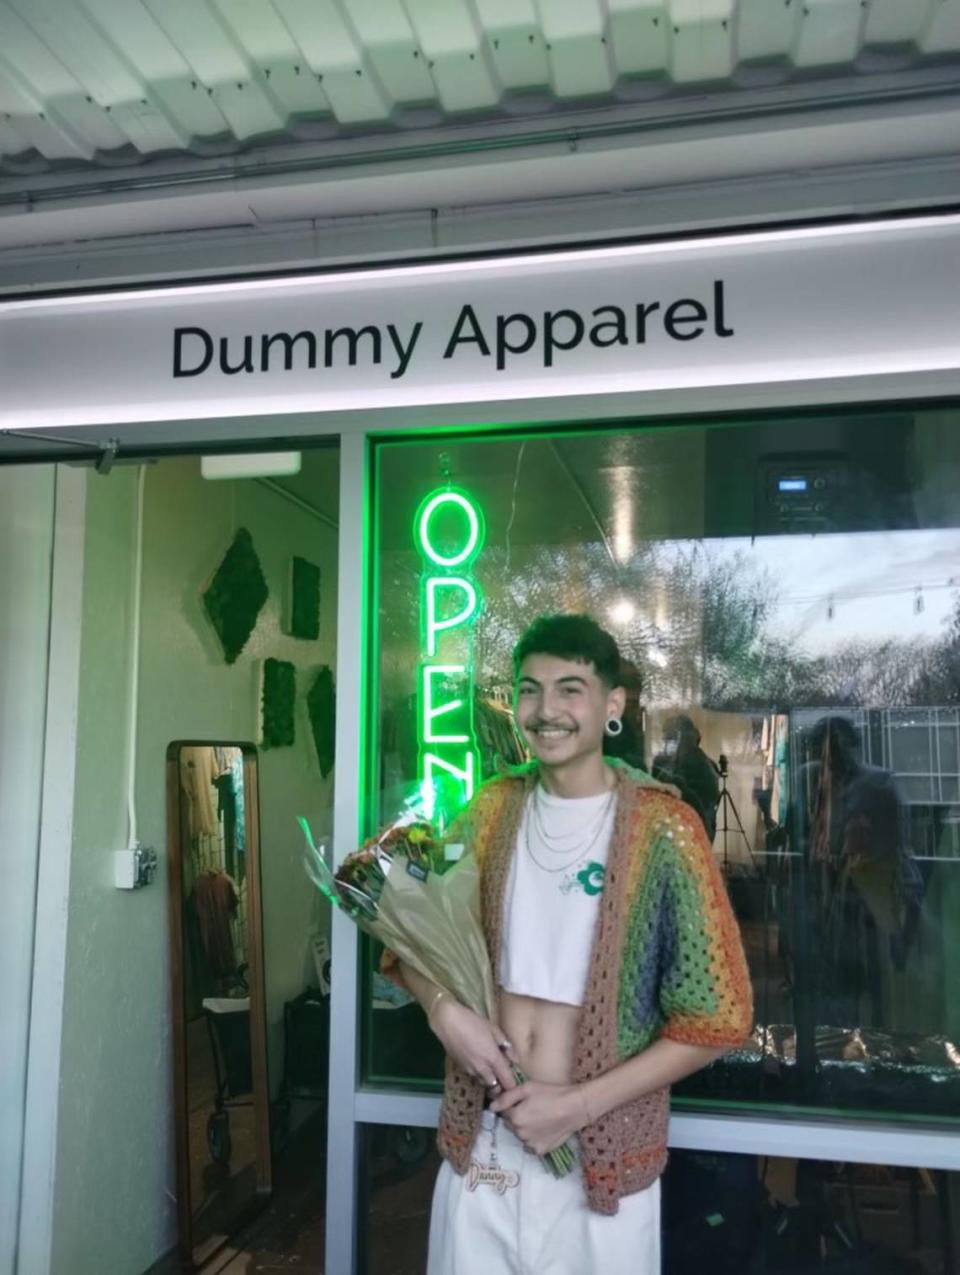 Danny Sun’s new Dummy Apparel sells custom clothing in the Garages incubator space at Revolutsia.